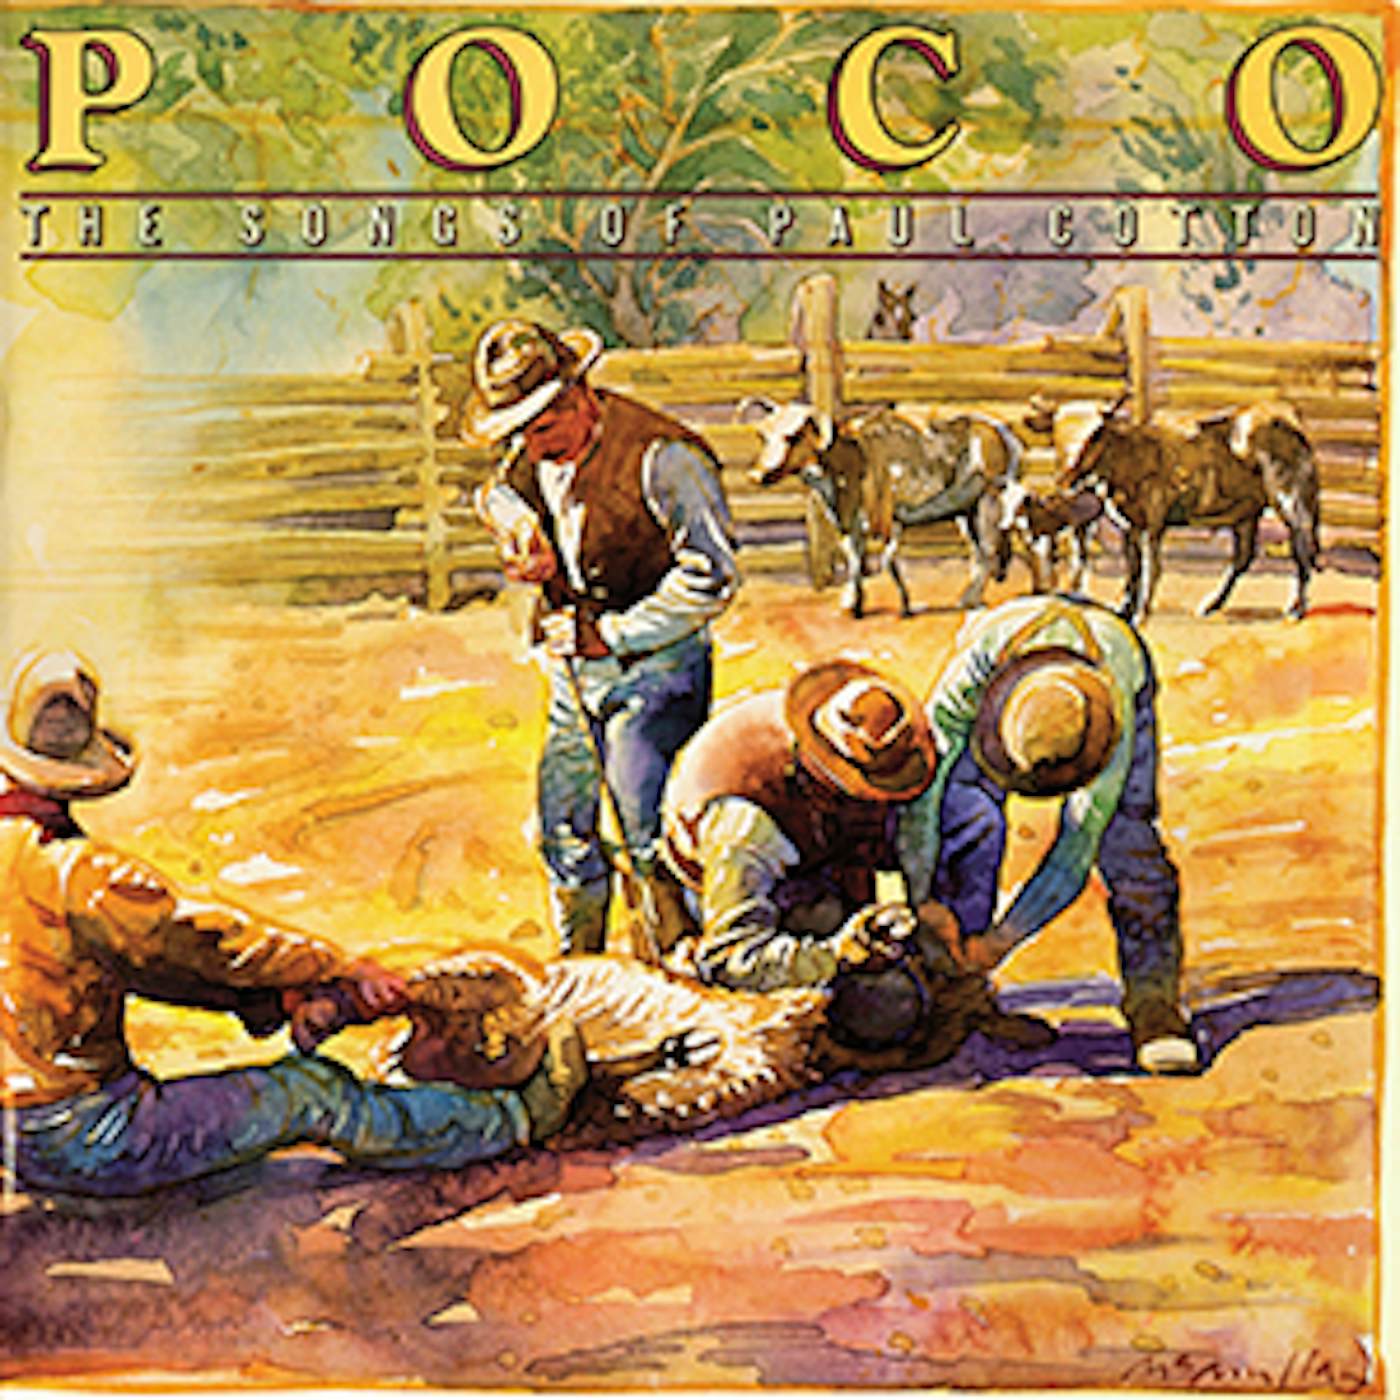 Poco SONGS OF PAUL COTTON CD